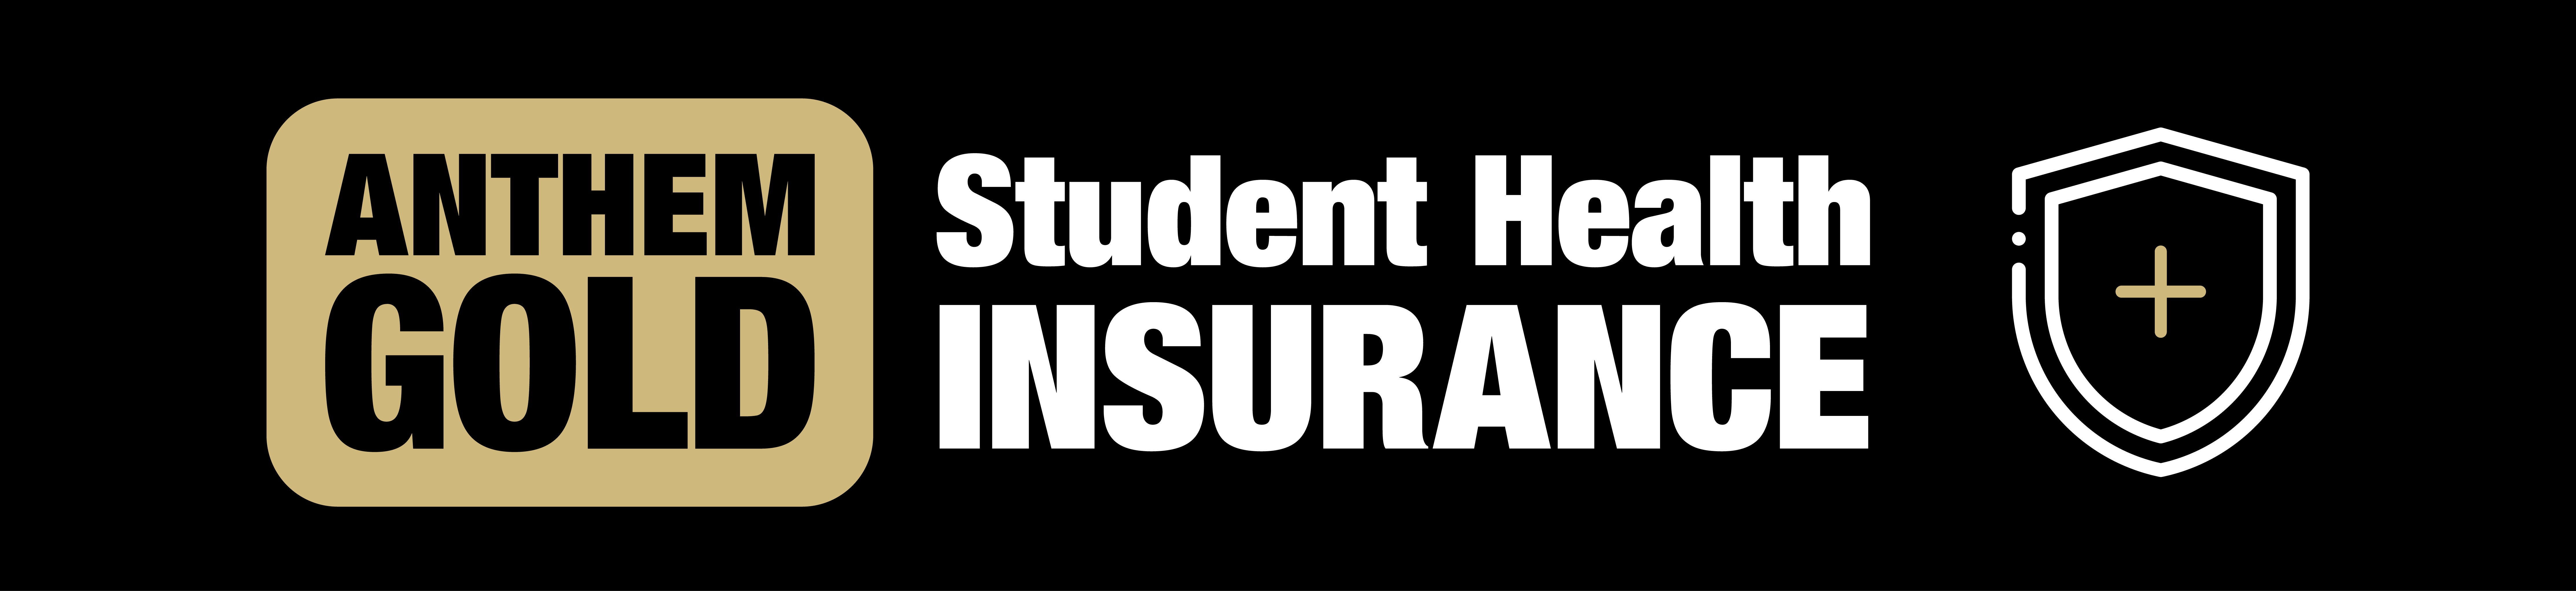 Anthem Gold Student Health Insurance